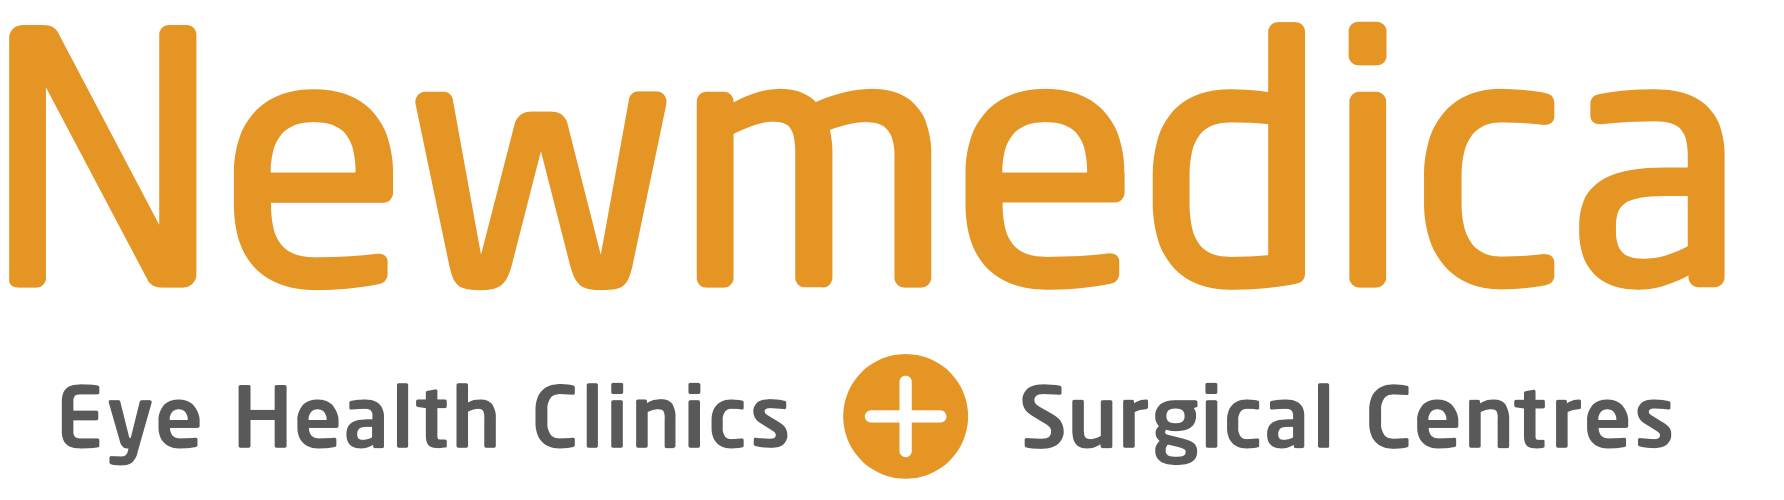 Plymouth – Newmedica logo